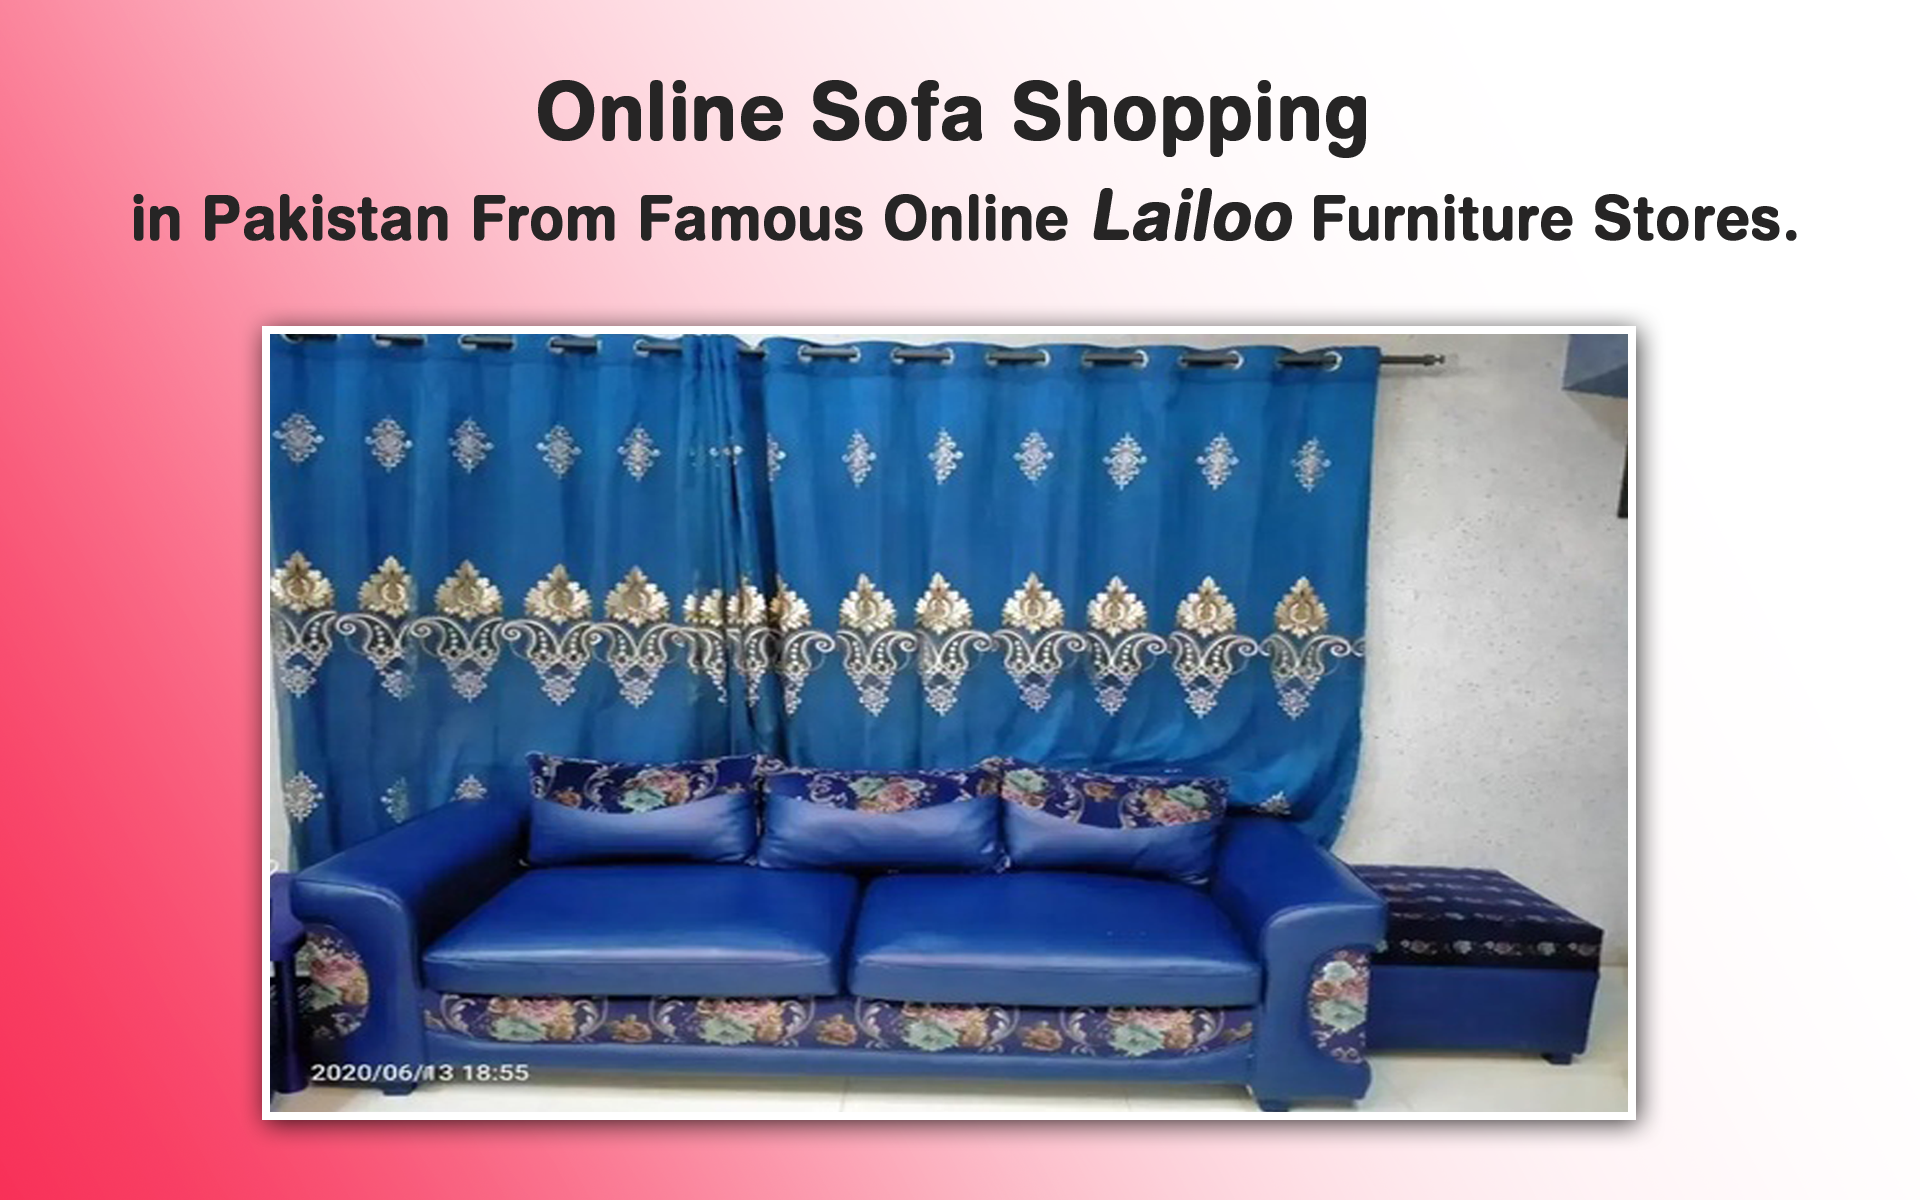 Sofa Set: Tips and Tricks for online sofa shopping